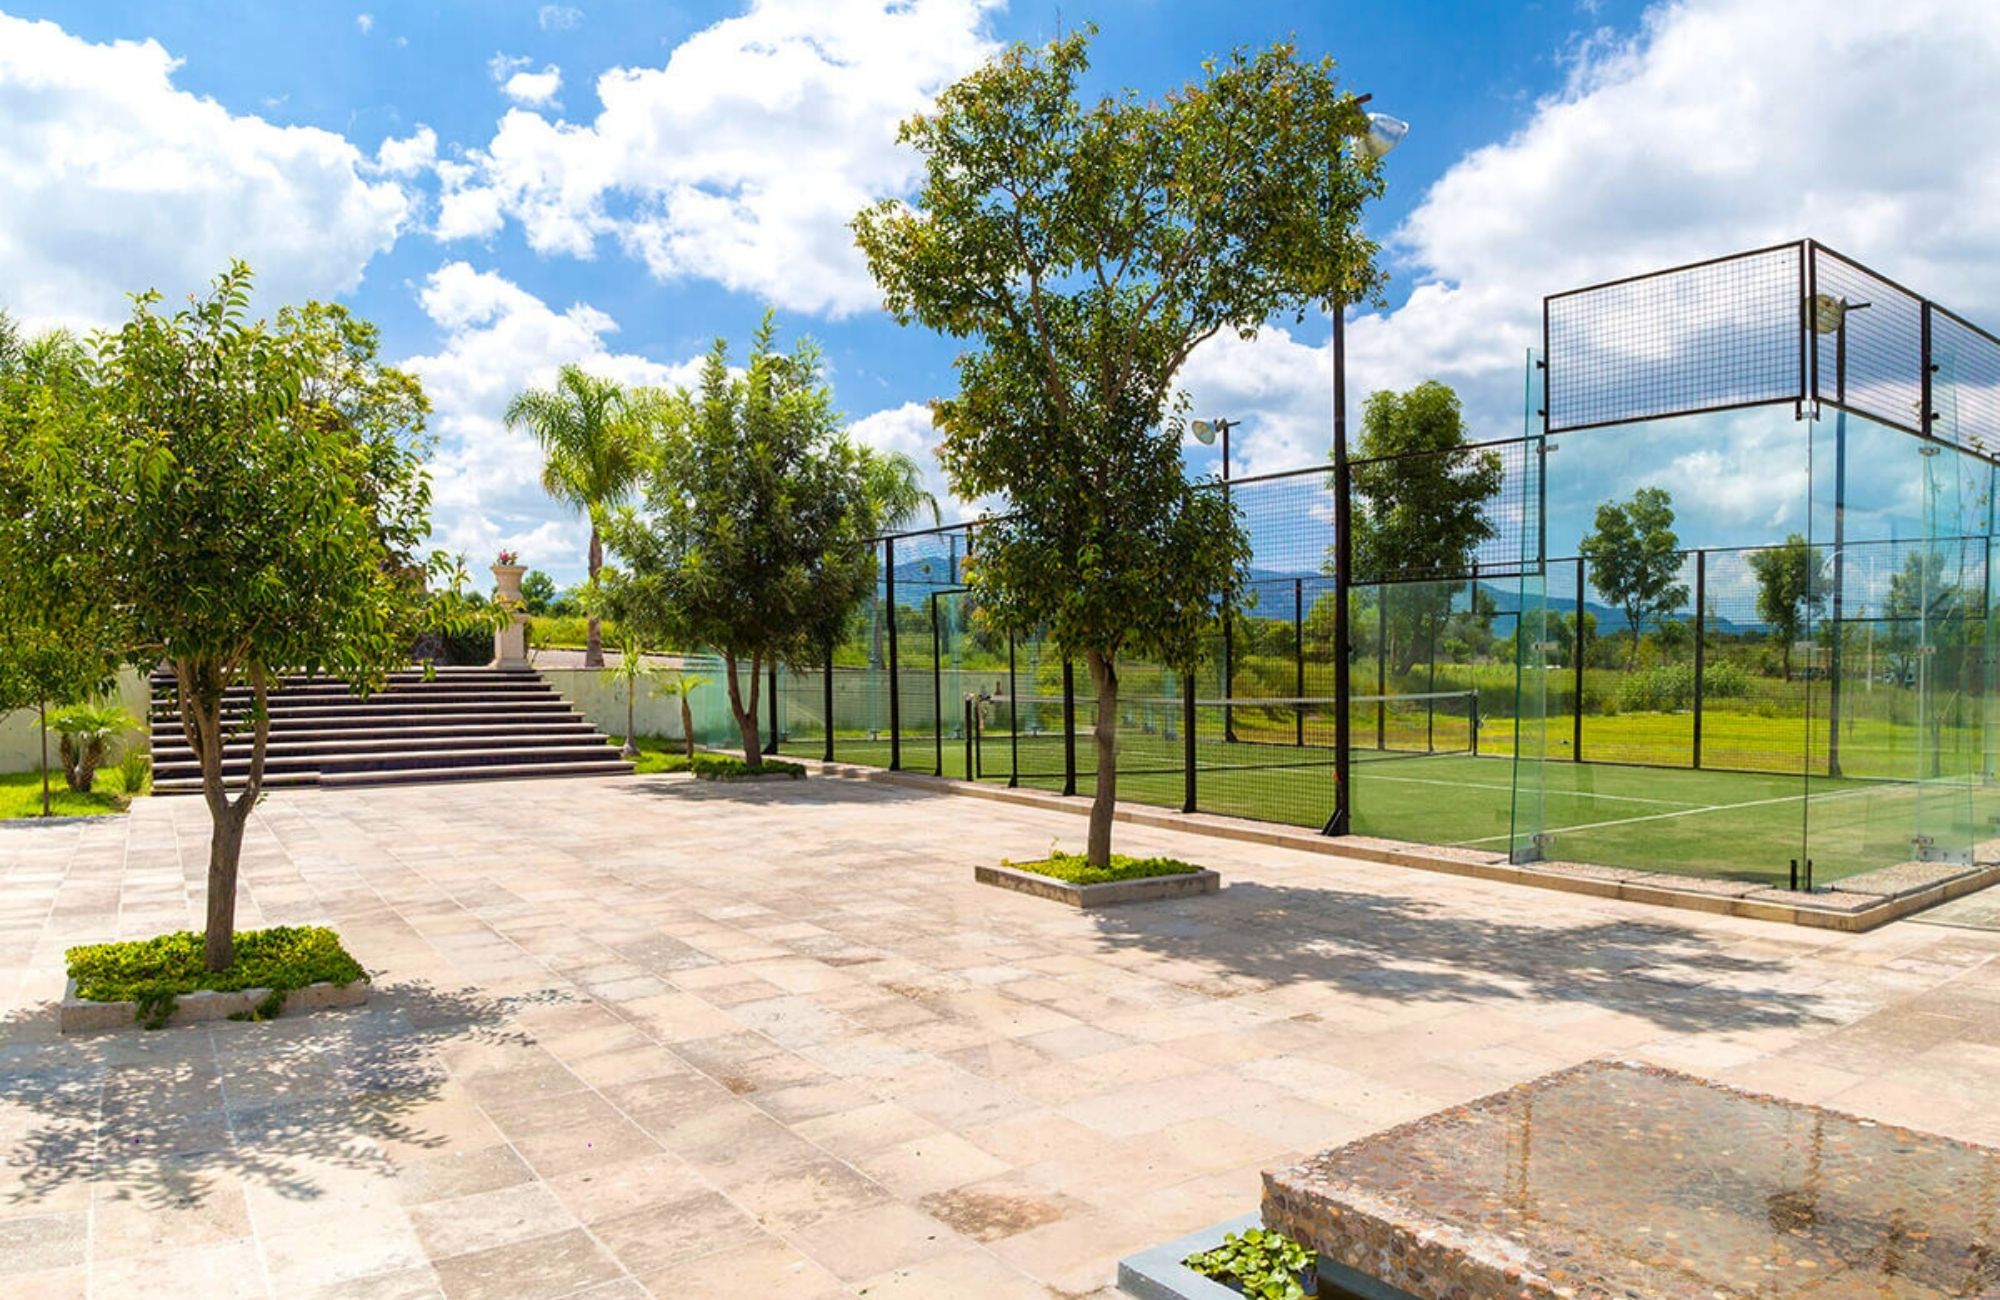 641 m2 lot in luxury community with amenities, for sale San Miguel de Allende.